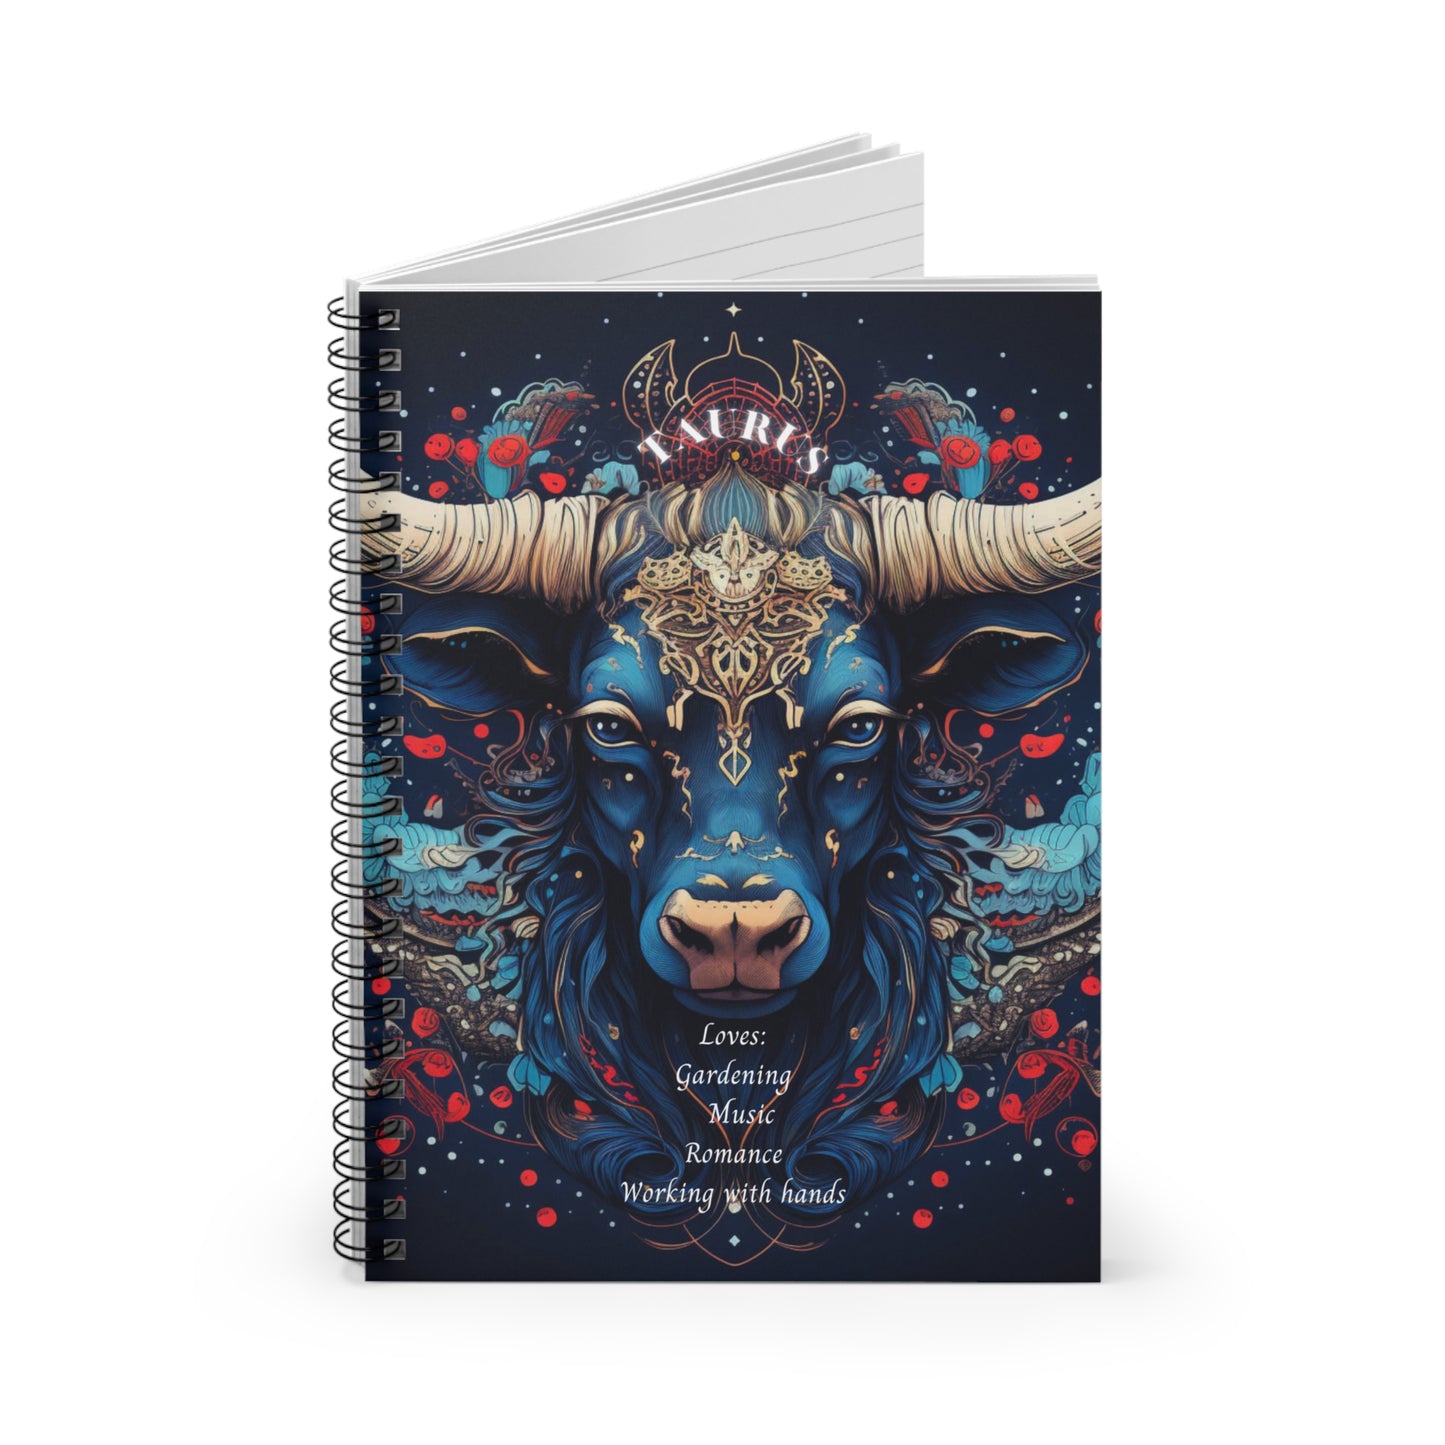 Taurus Zodiac Traits | Original Art | Spiral Notebook - Ruled Line